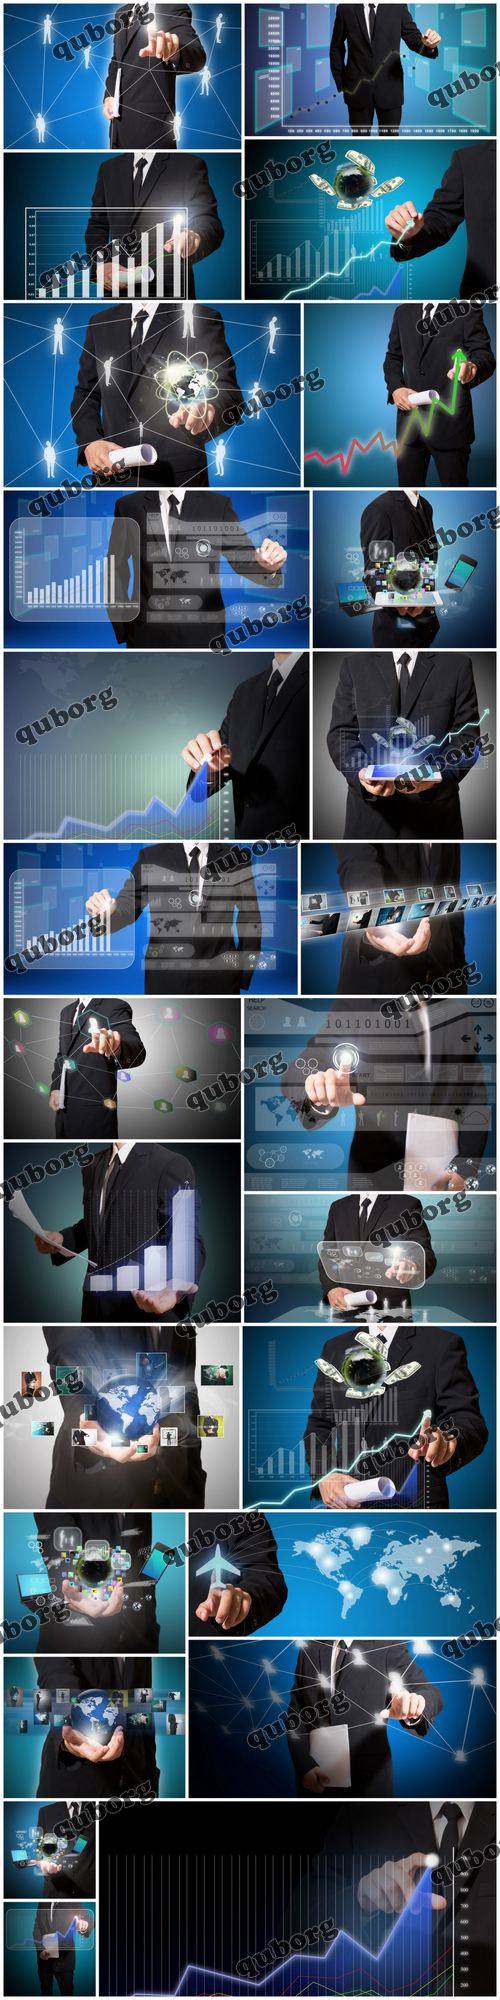 Stock Photos - Businessman and Technology